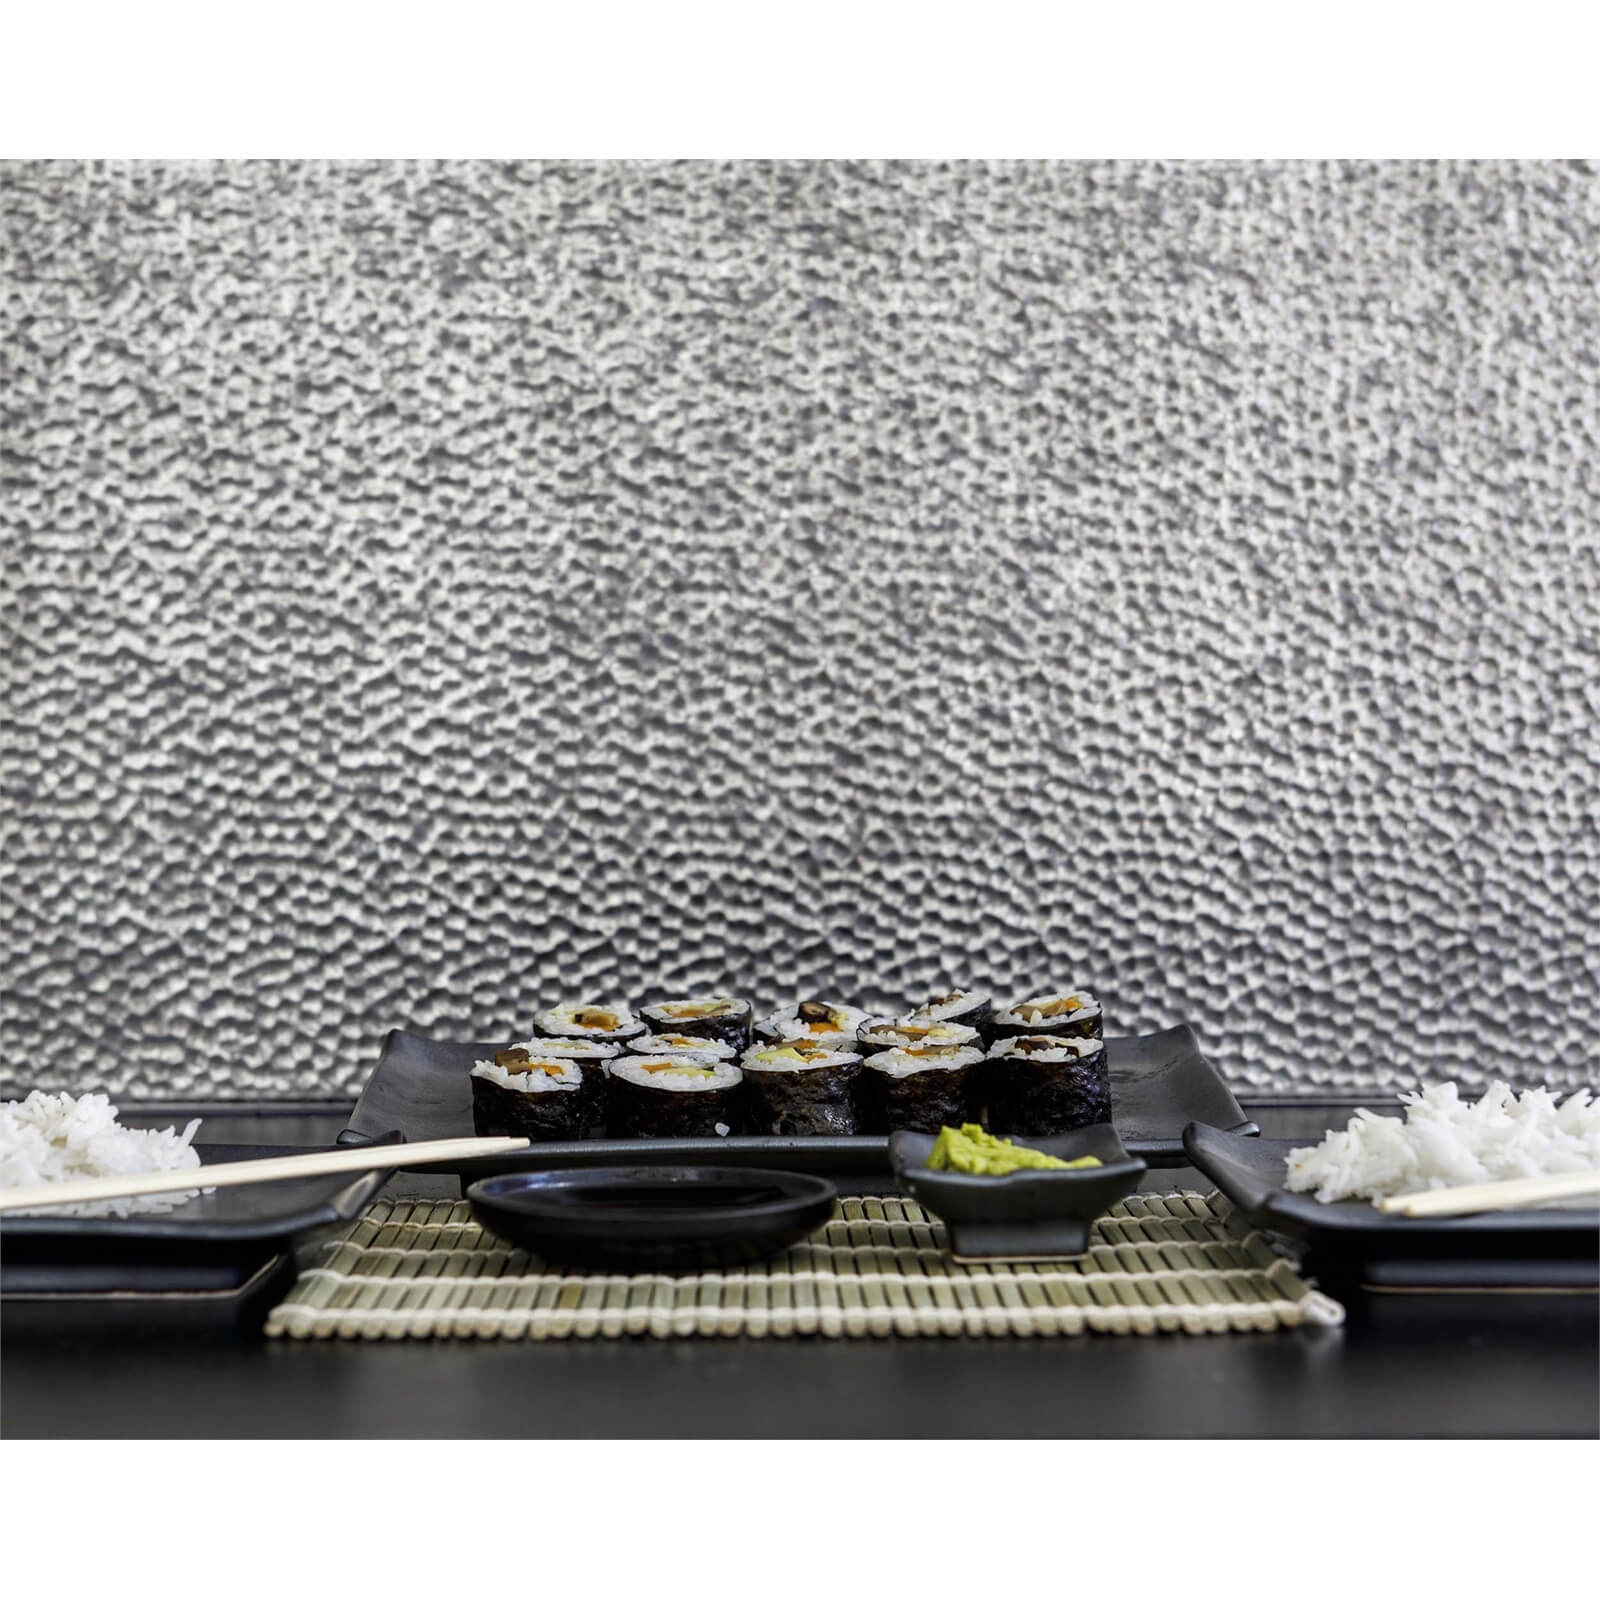 Innovera Decor 3D Design Wall Tile - Kitchen Splashback Cladding Panels ( Lamina - Silver, set of 6)